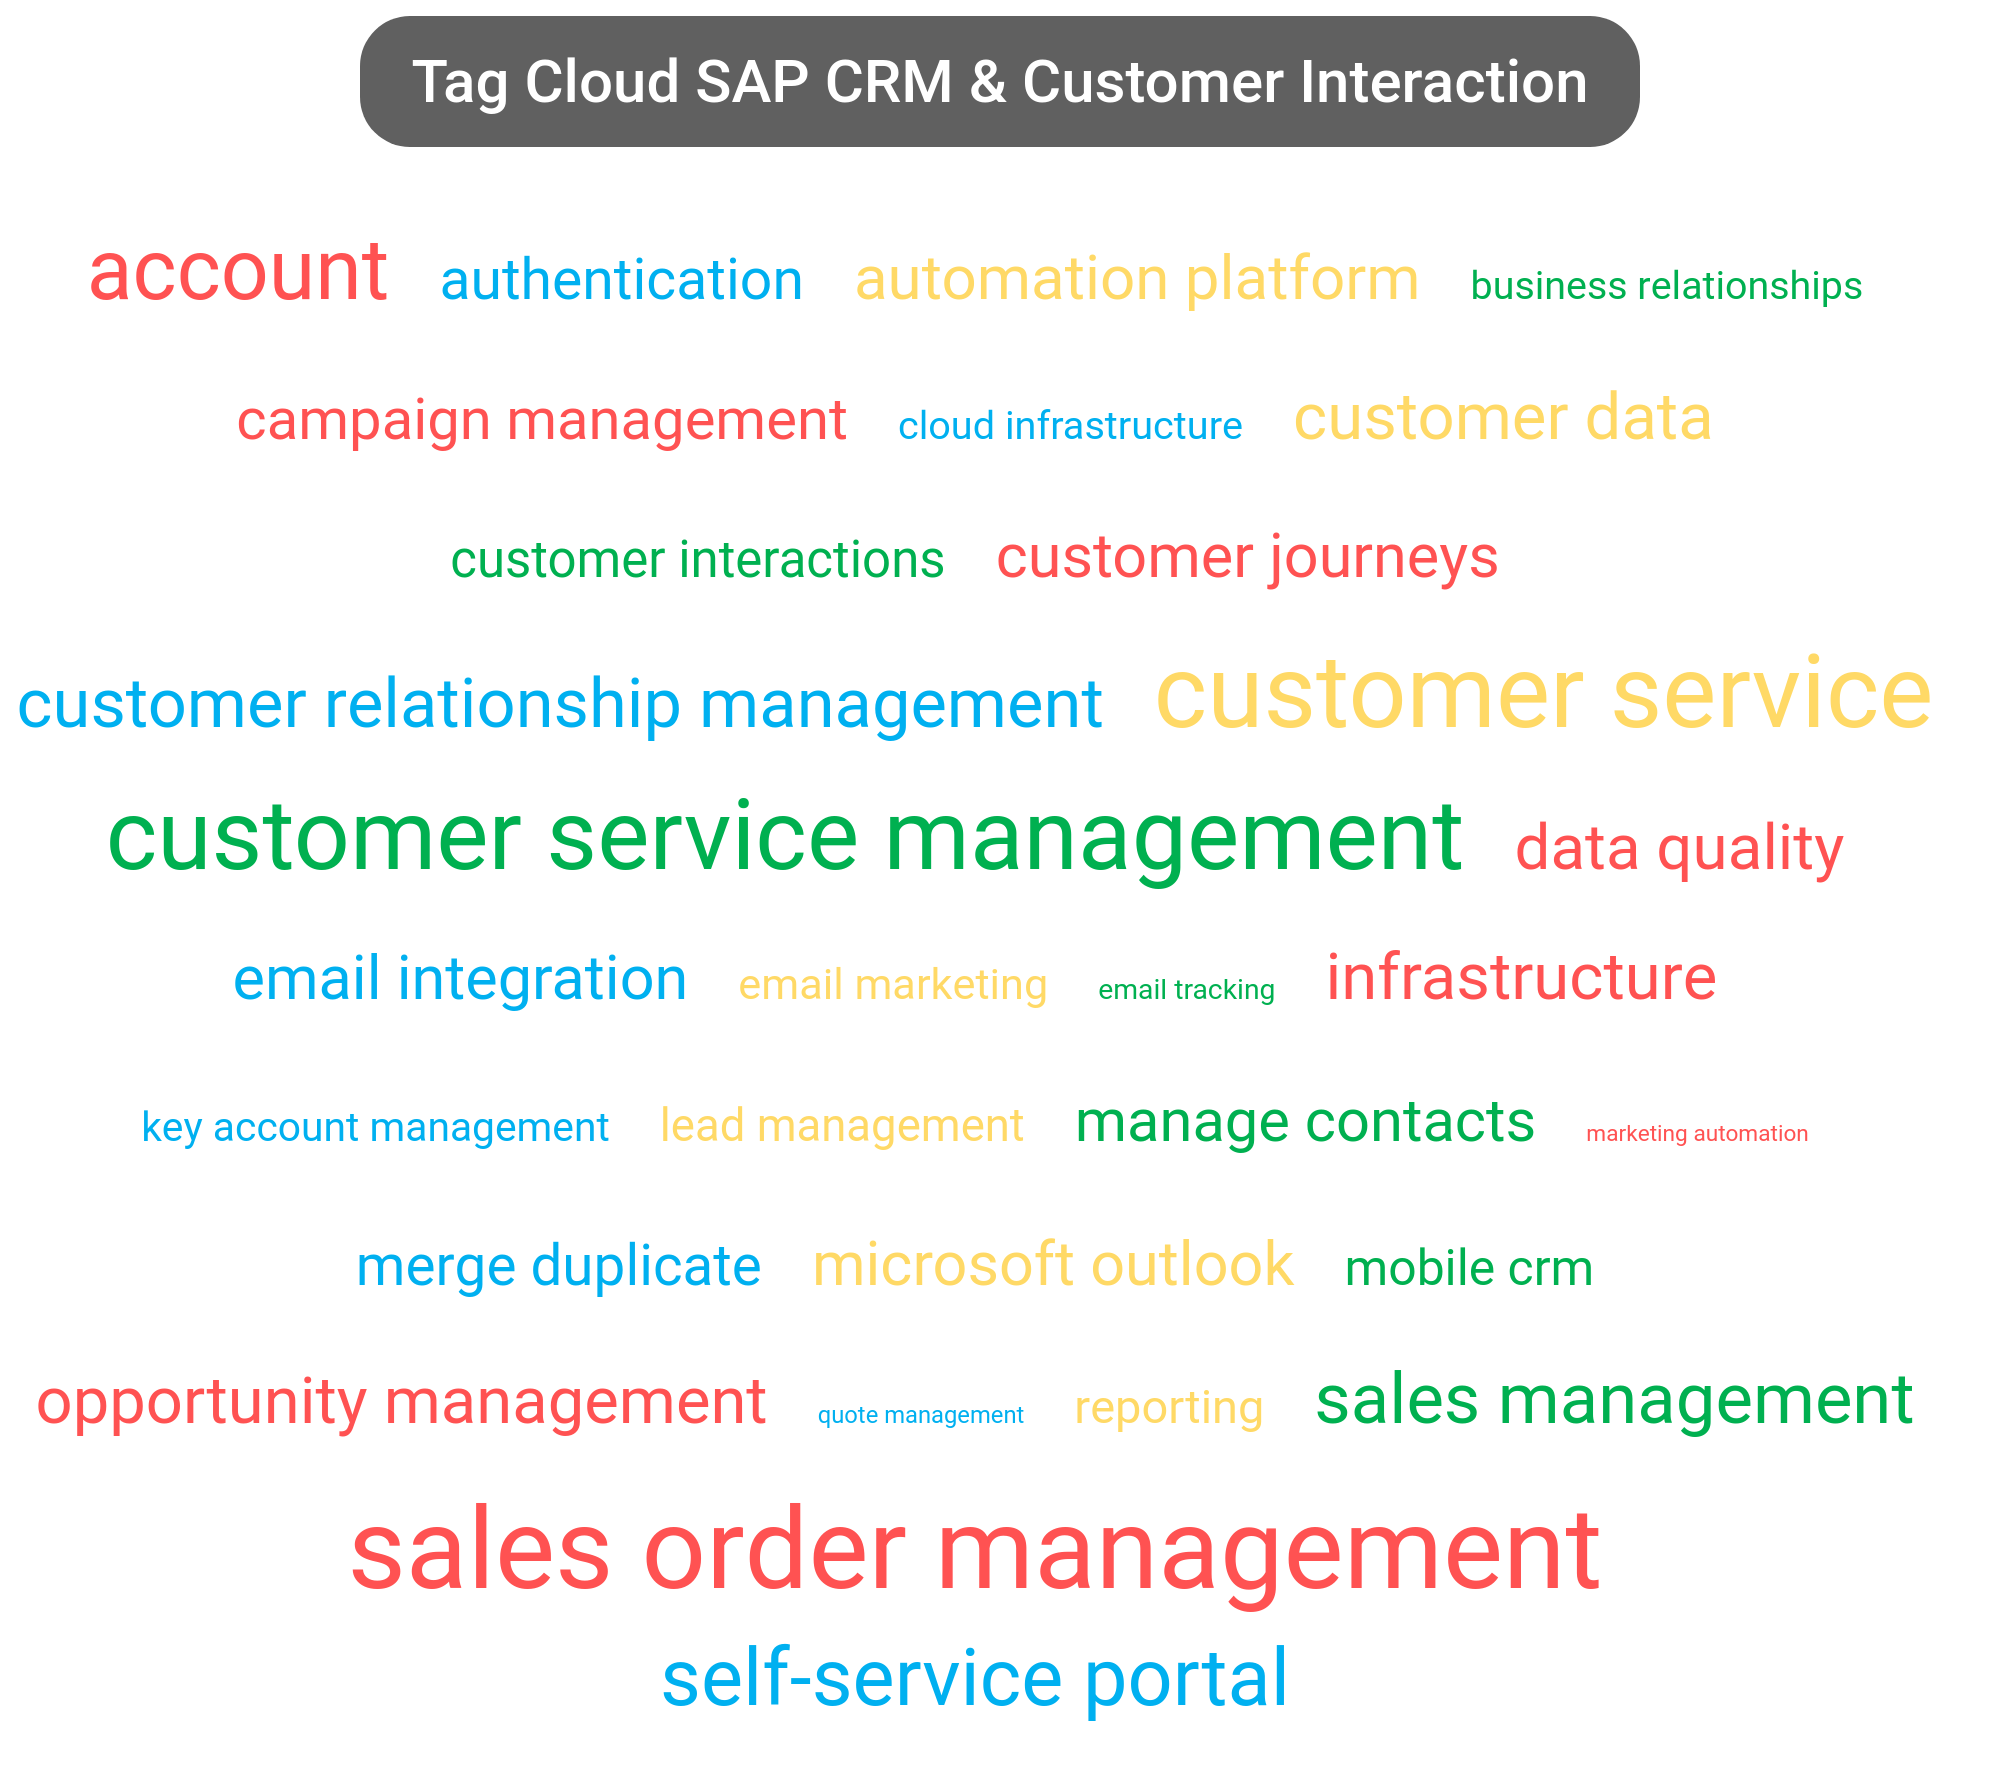 Tag cloud of the SAP CRM tools.